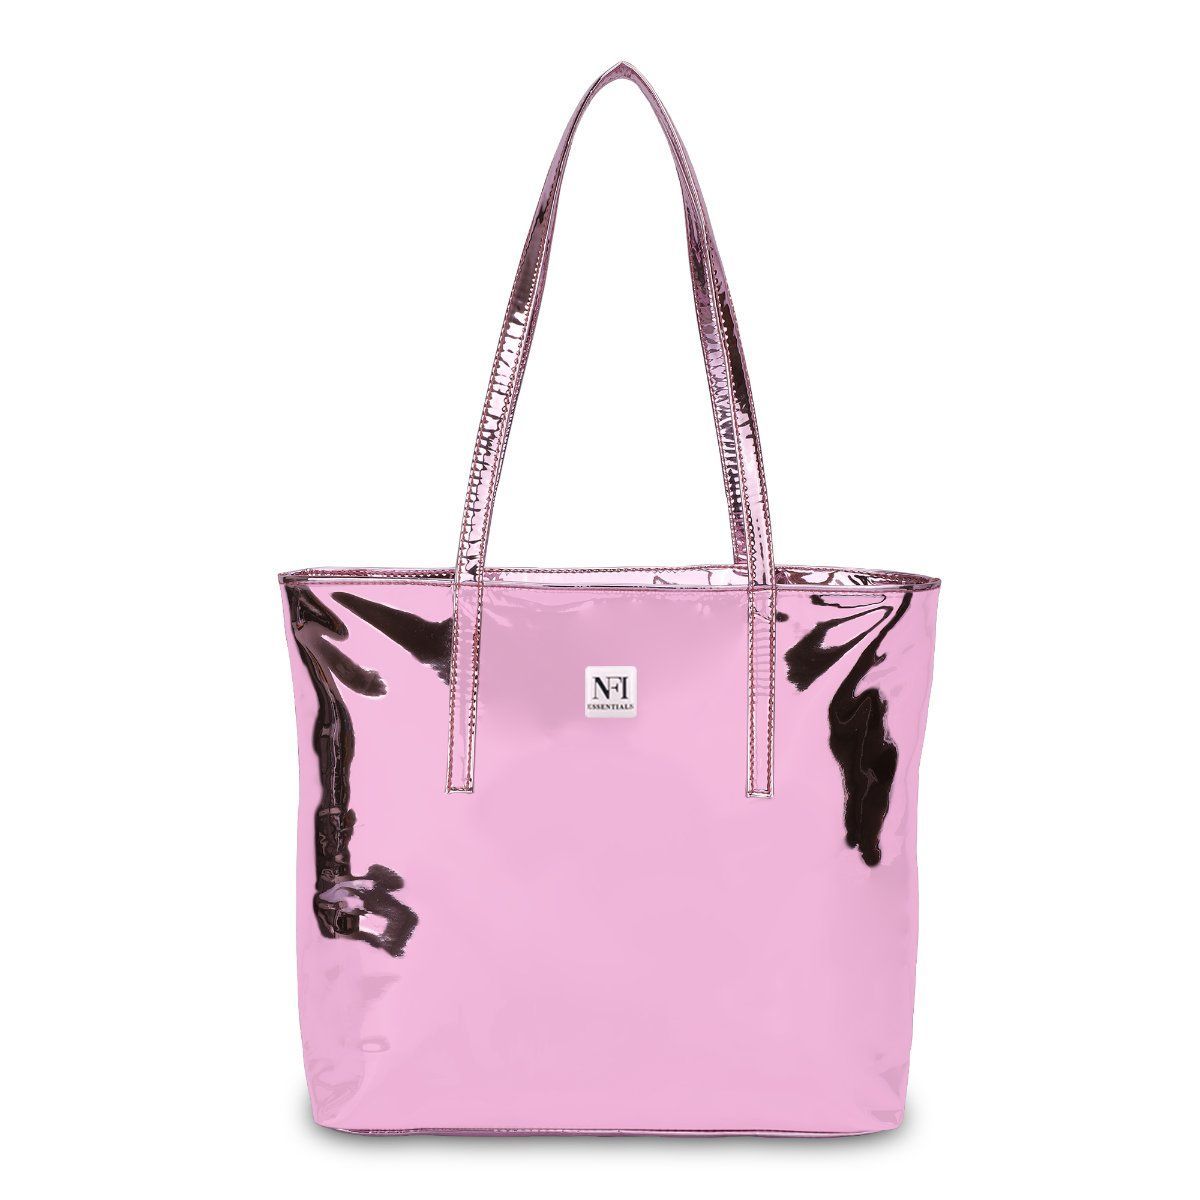 VICTORIA S SECRET Makeup Bag Pink & White Stripes | Large makeup bag,  Makeup bag, Pink bag